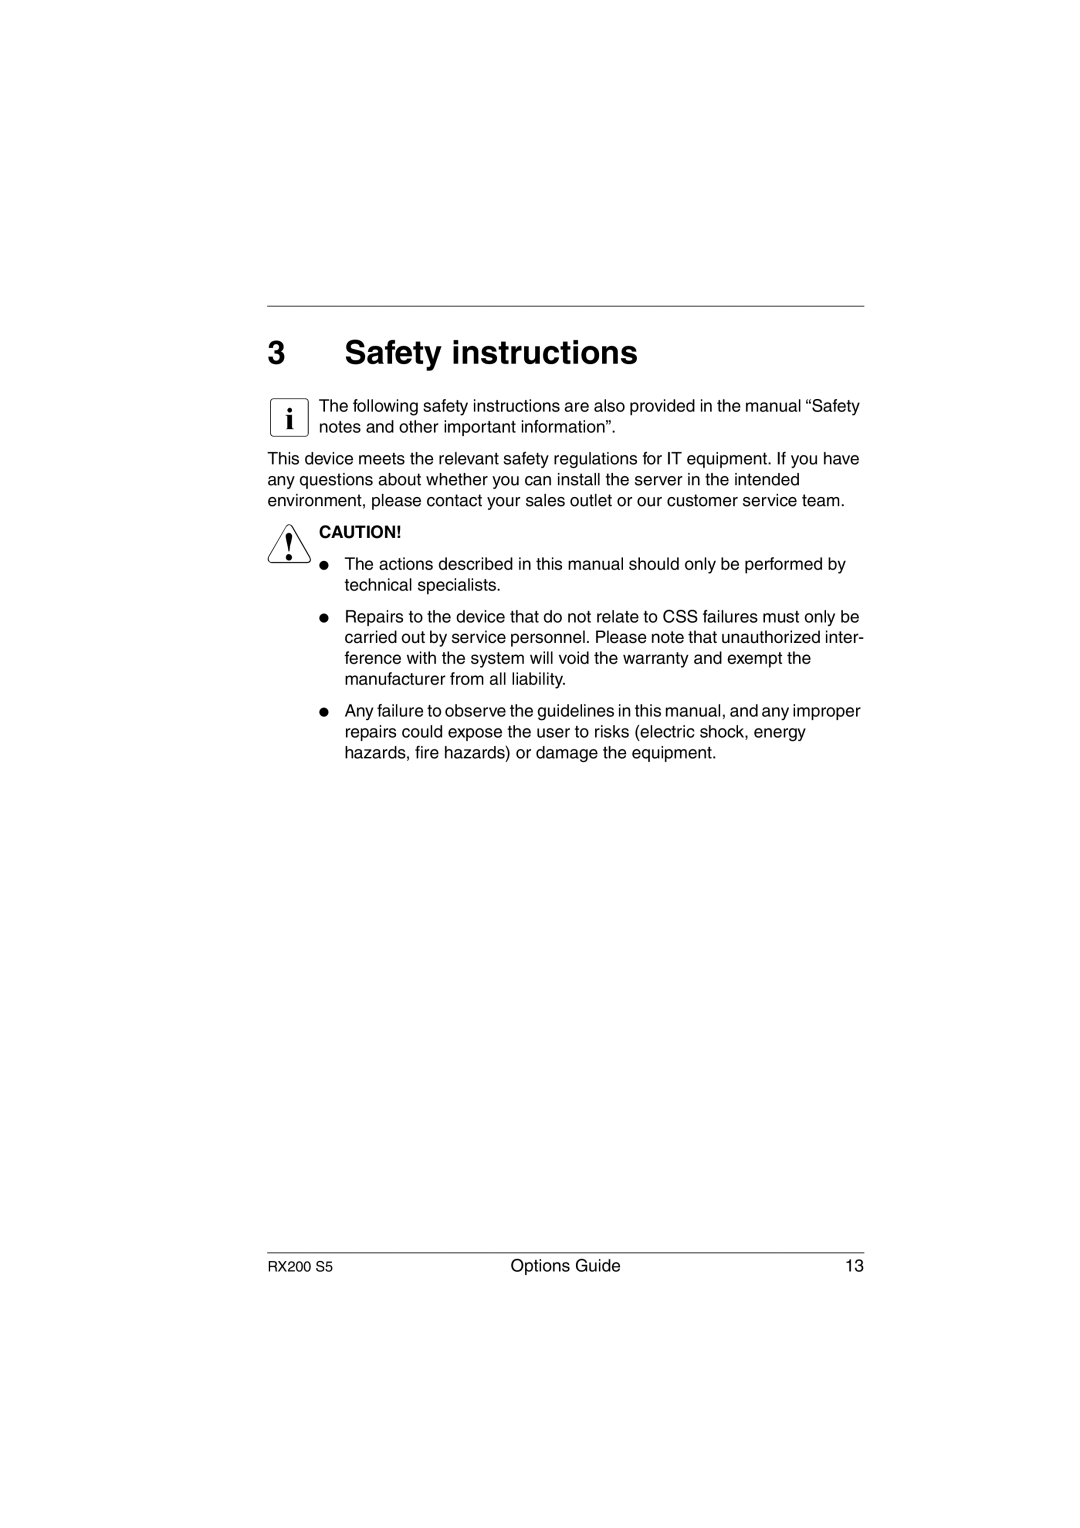 Fujitsu RX200 S5 manual Safety instructions 